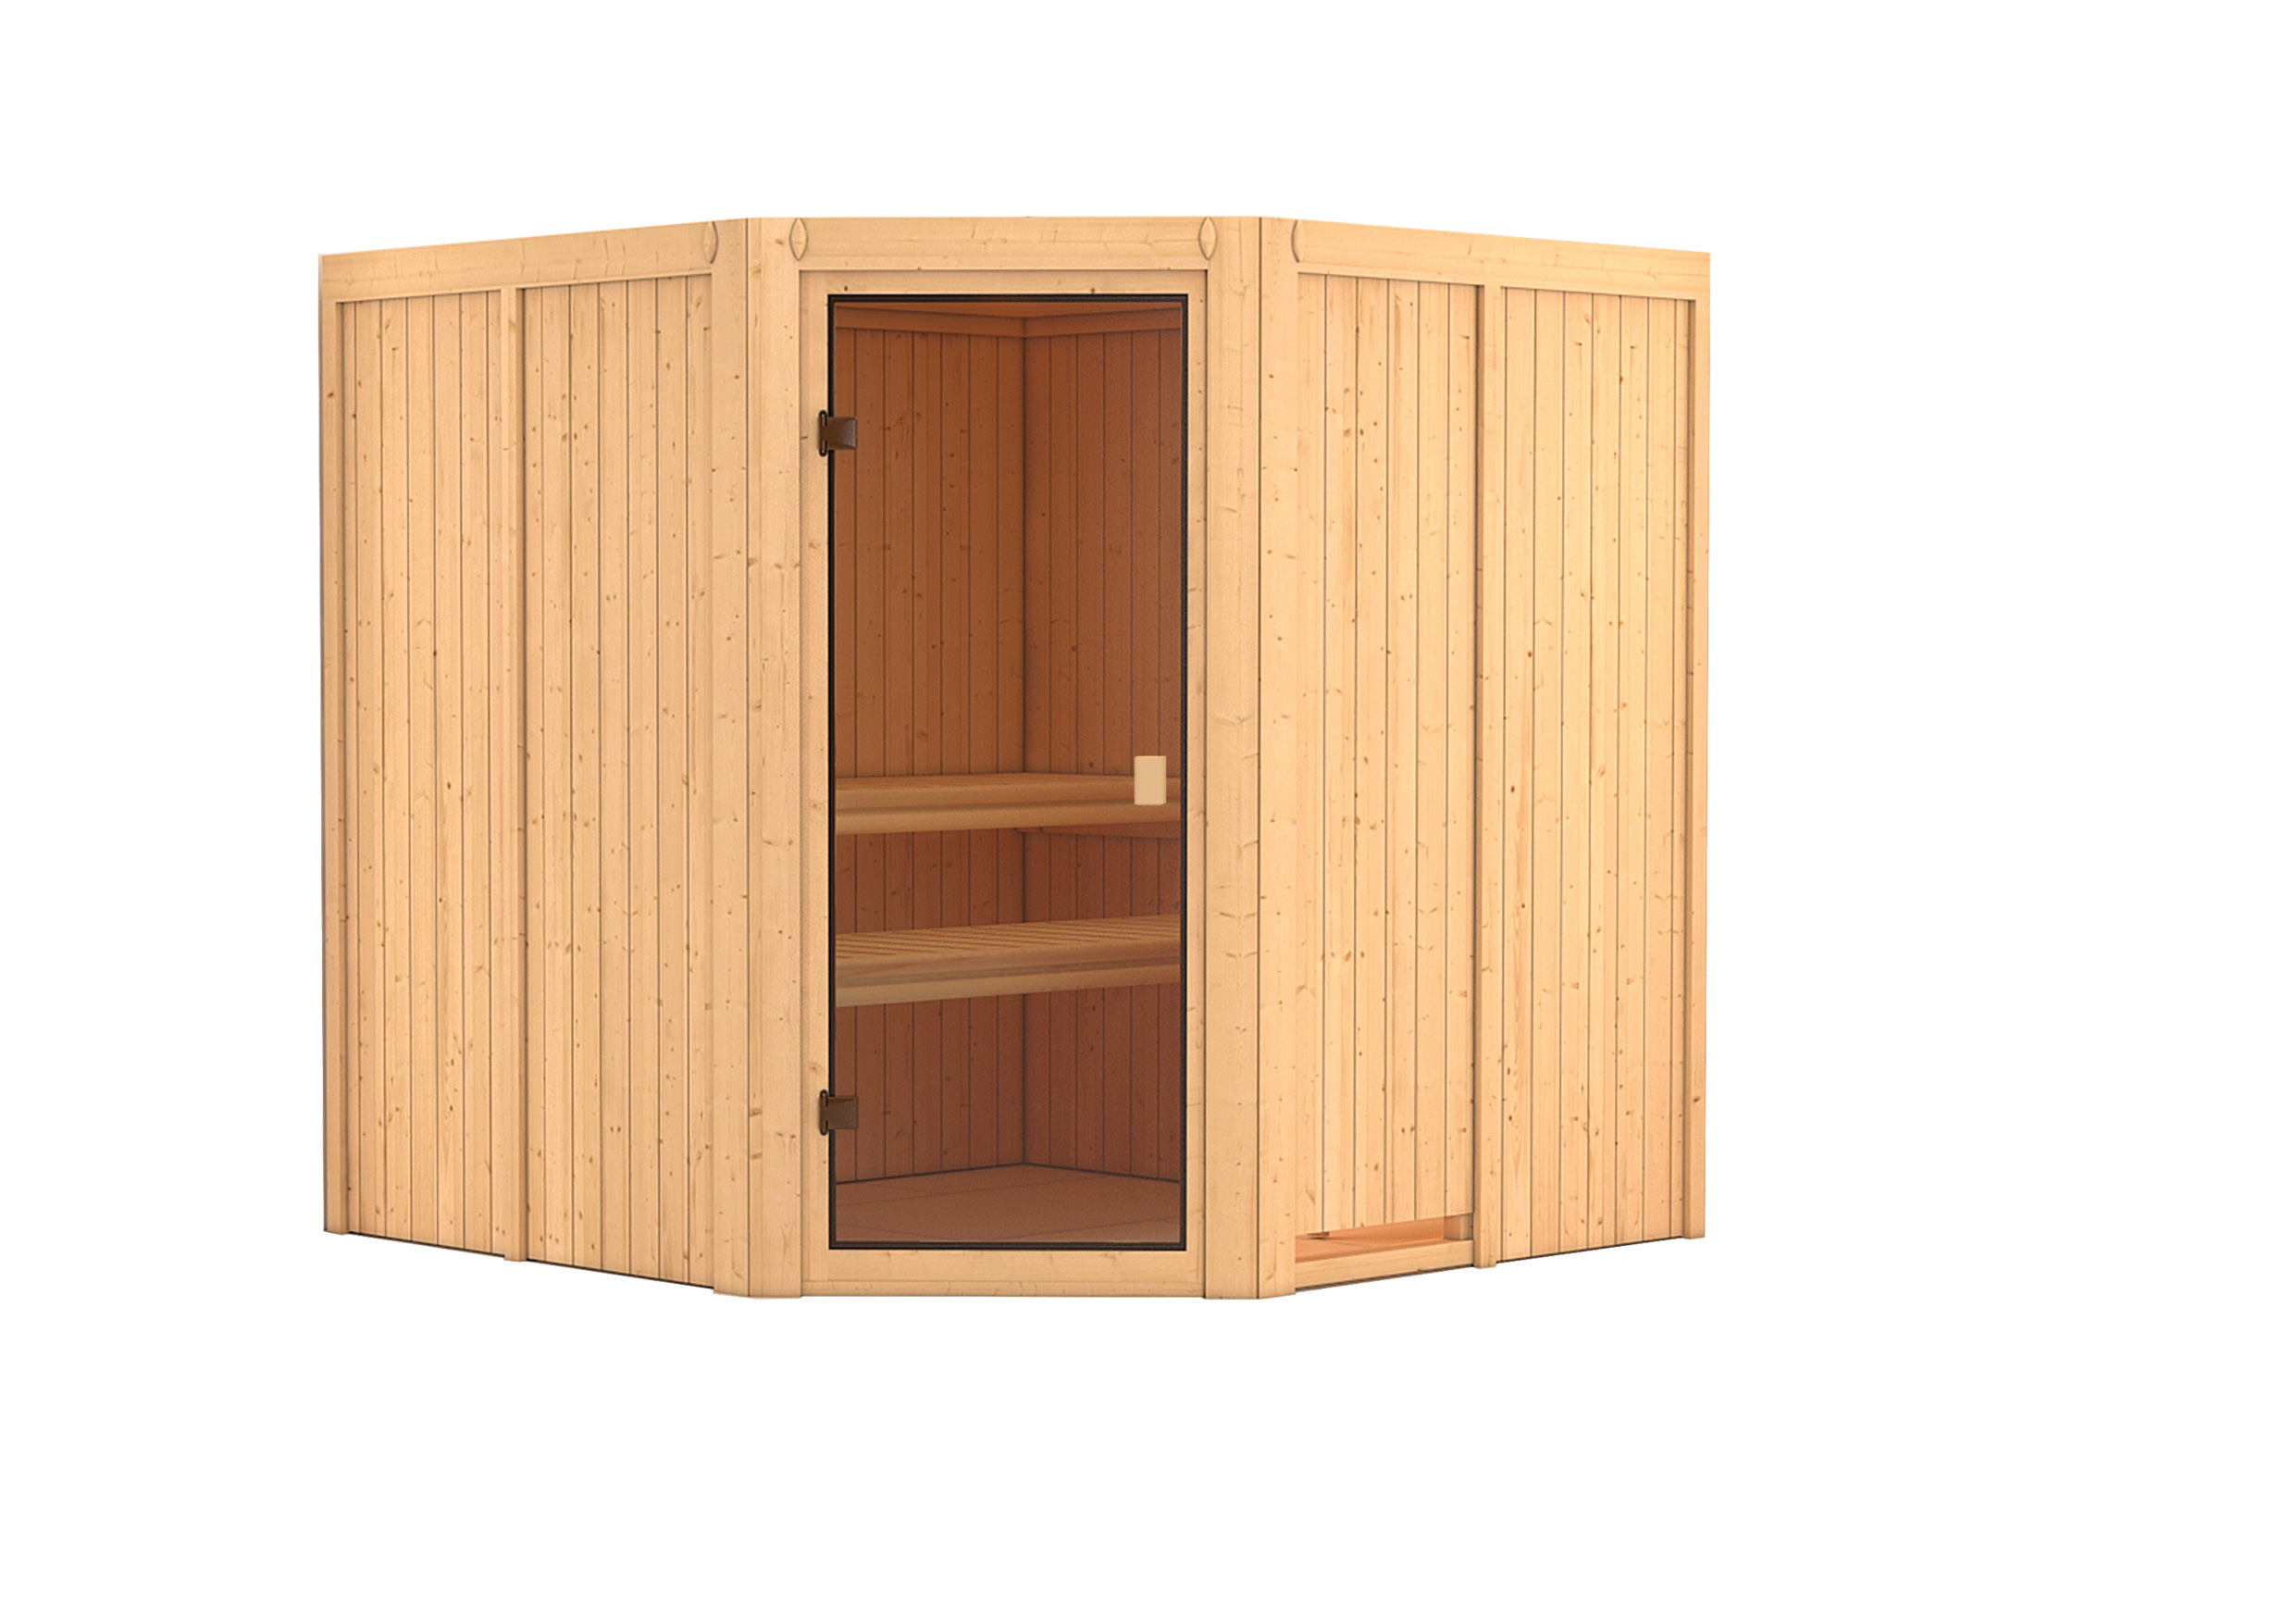 Karibu Woodfeeling Sauna Kotka - 68 mm Aktionssauna inkl. 9-teiligem gratis Zubehörpaket